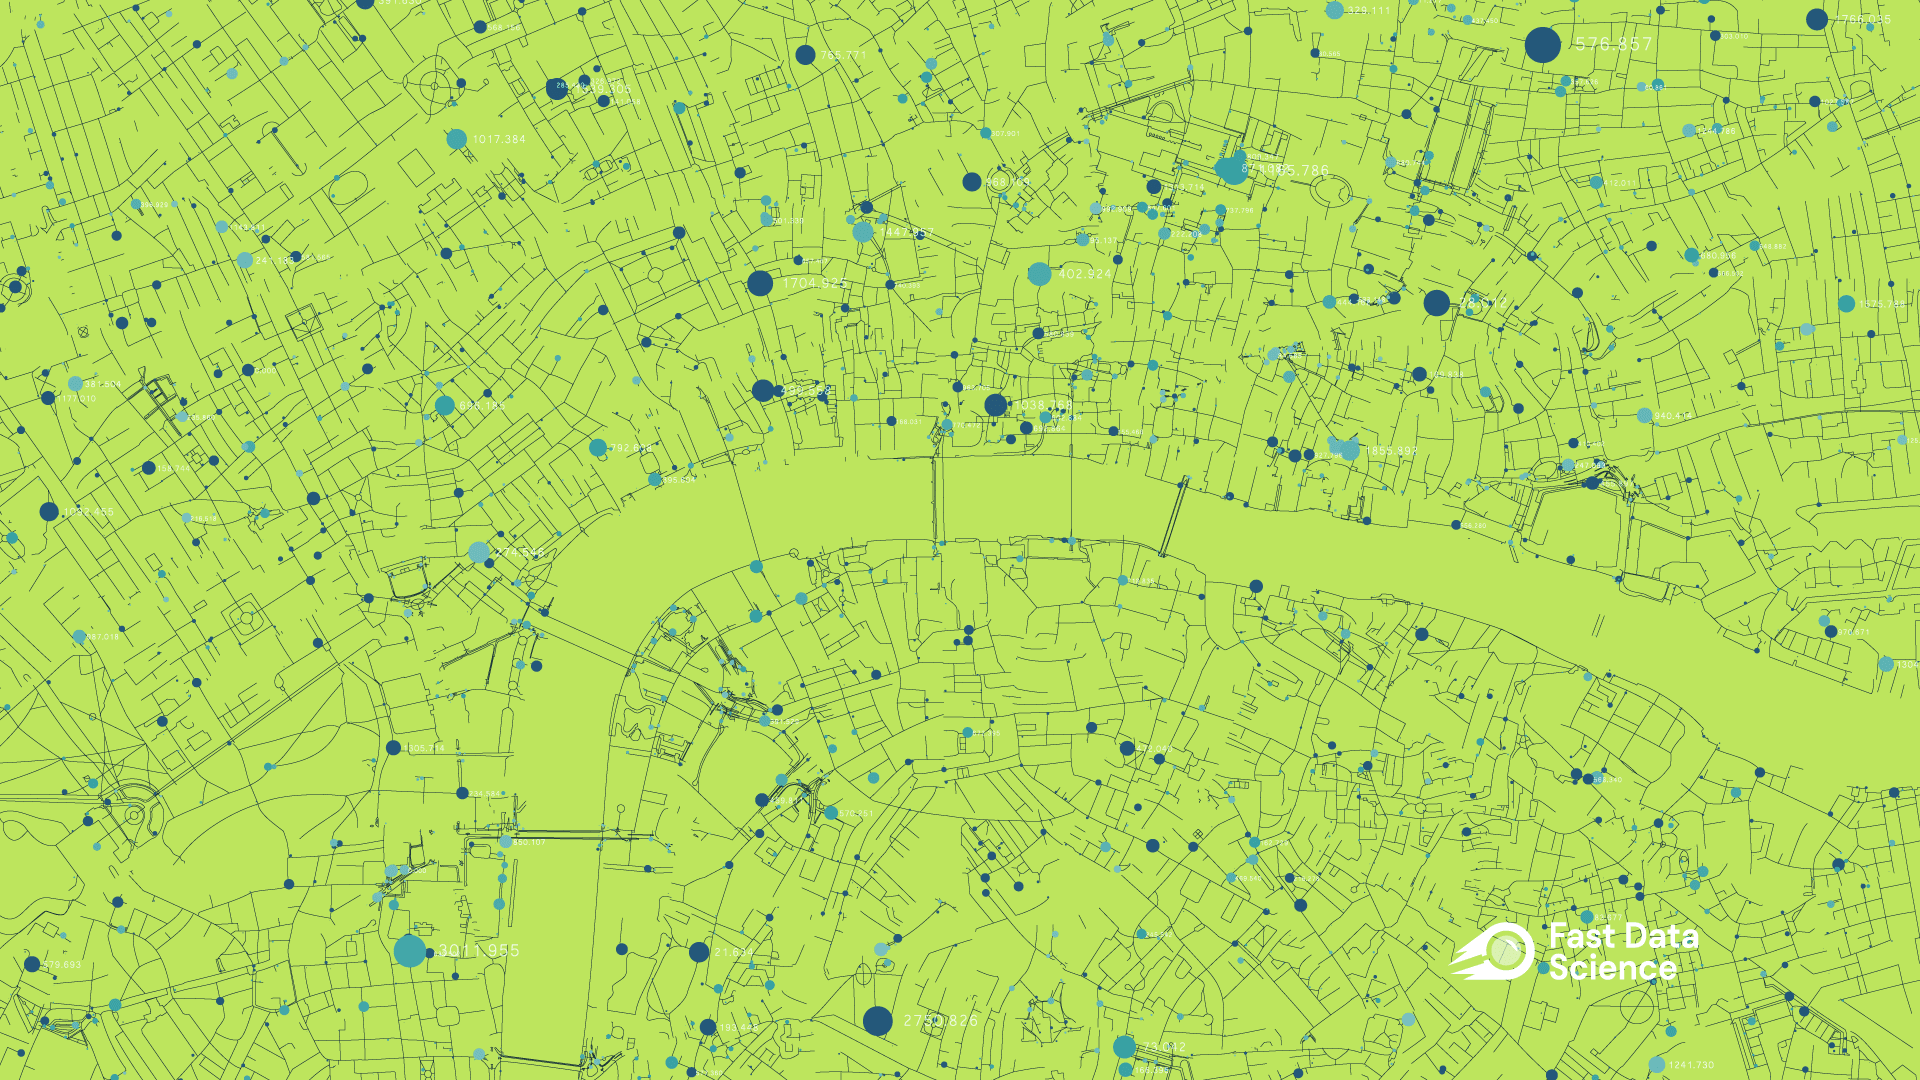 Understanding cities through foot traffic data analytics